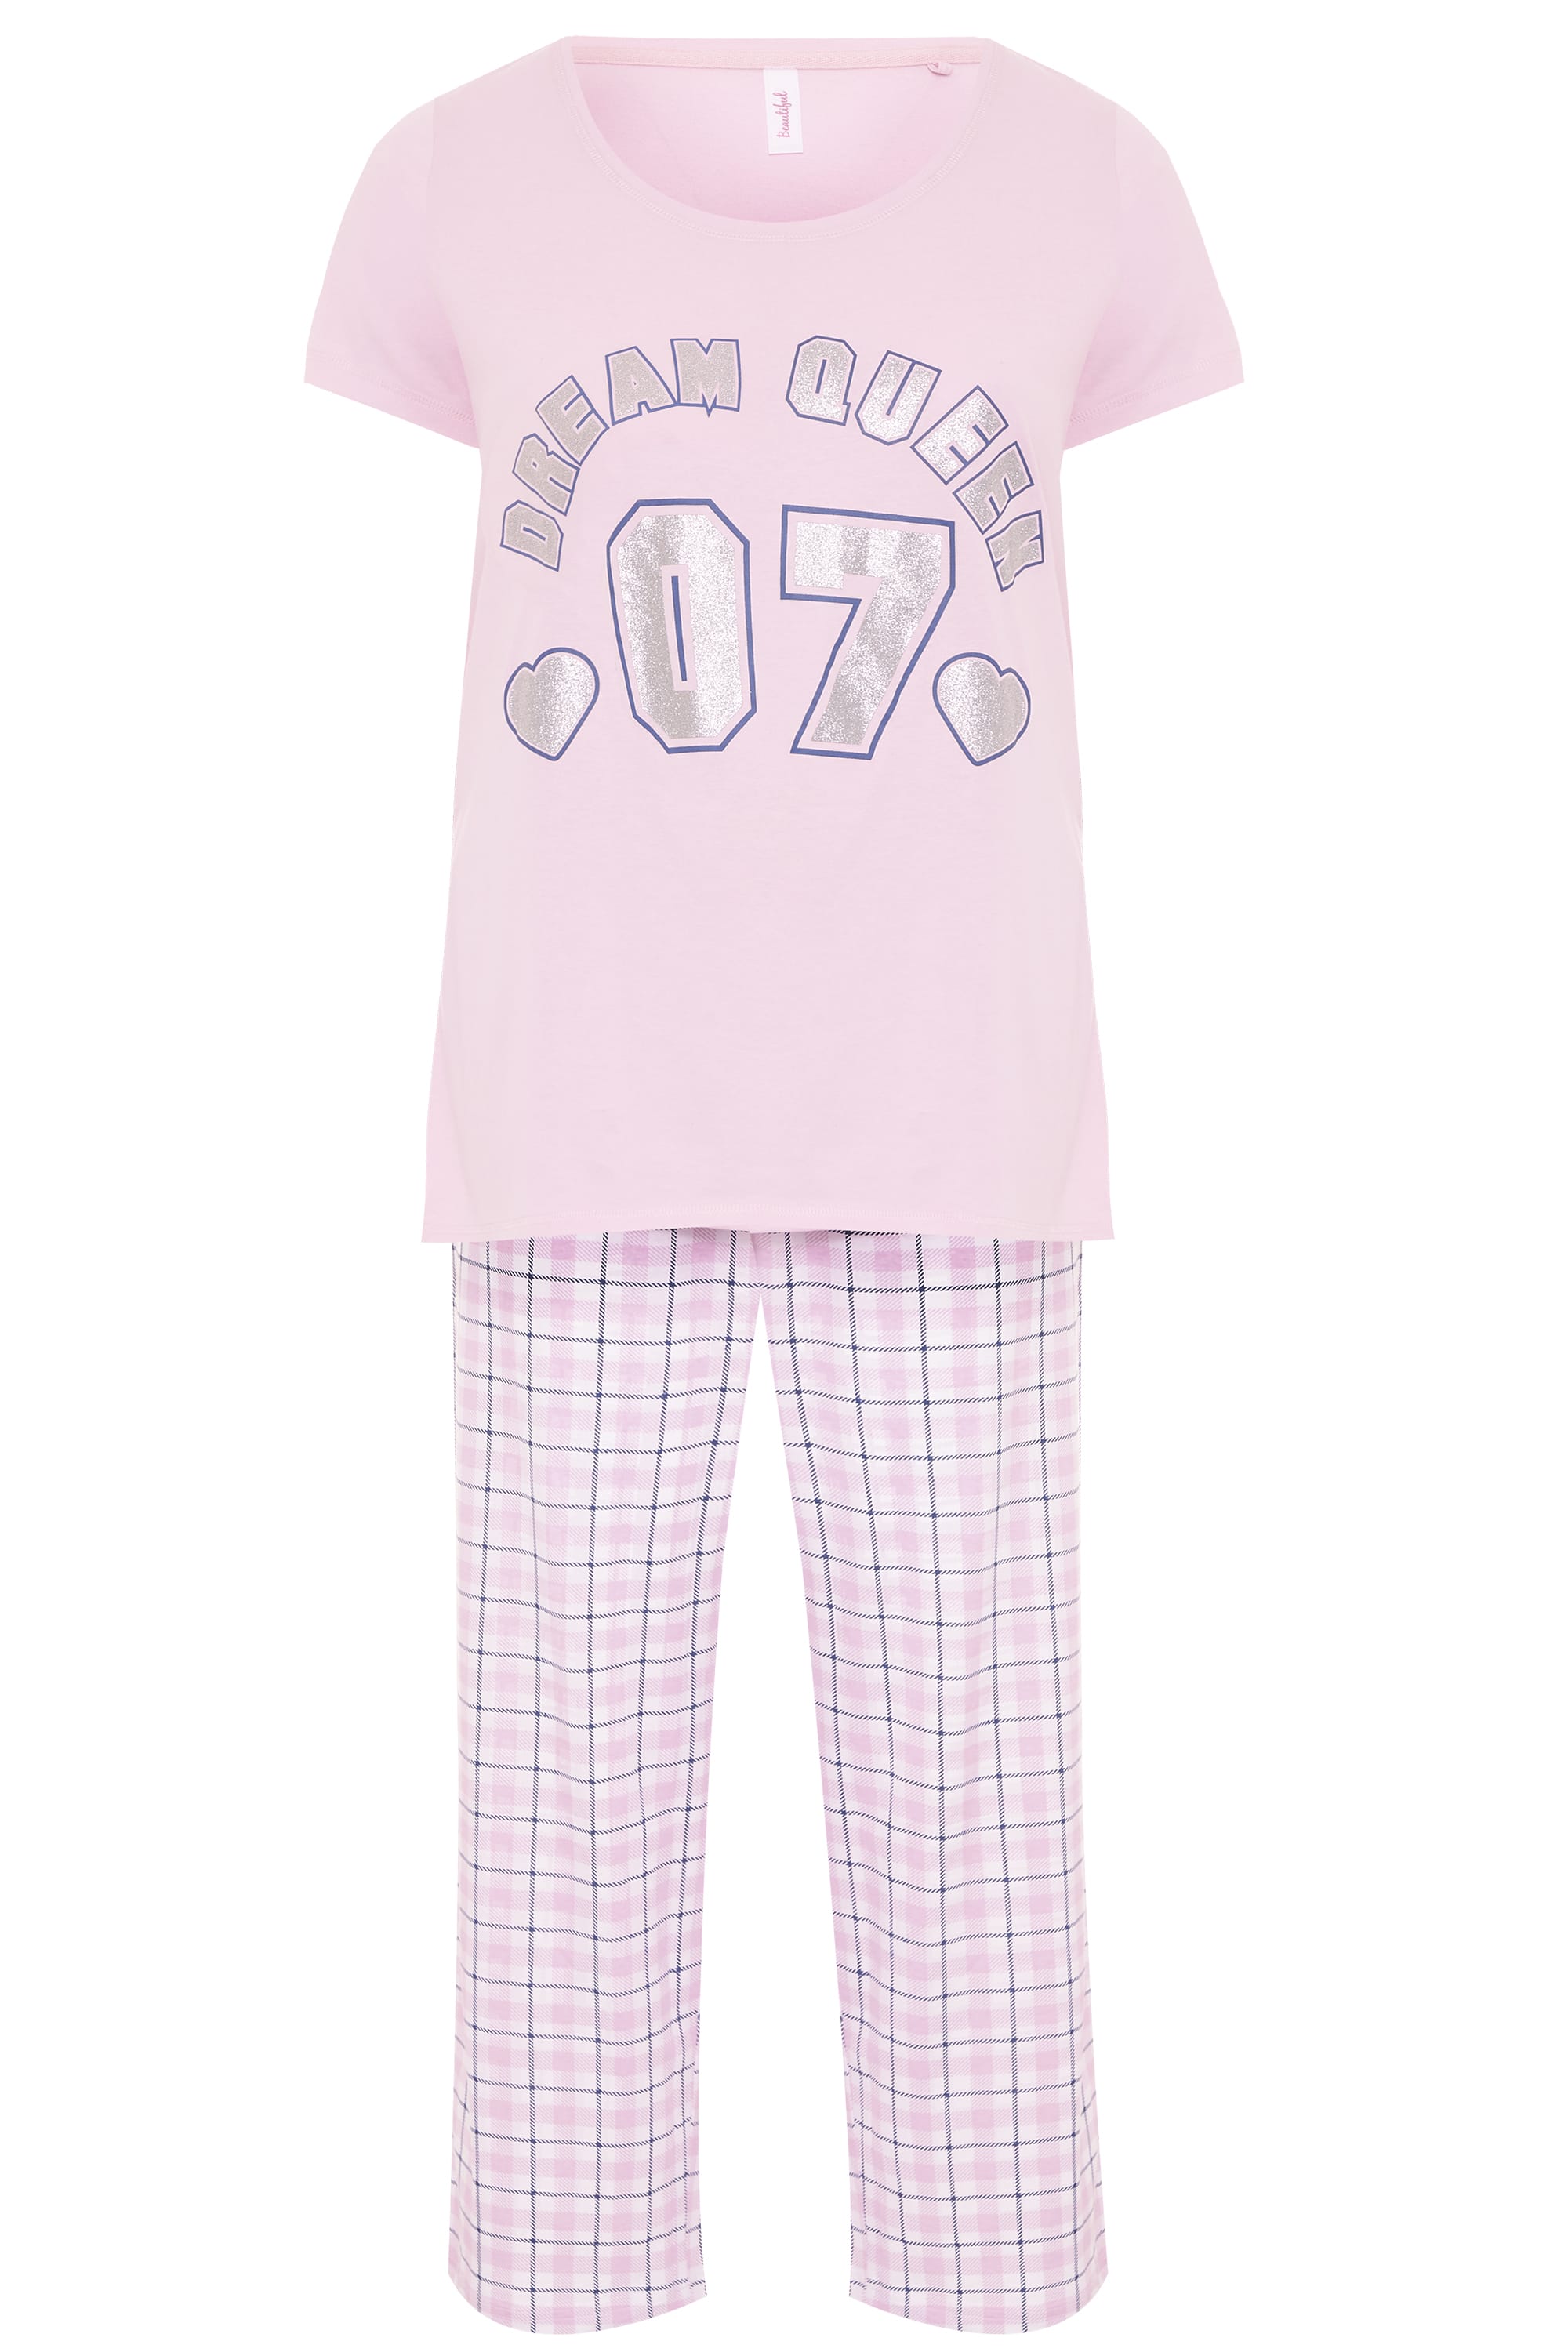 Pink Glitter 'Dream Queen' Pyjama Set | Yours Clothing